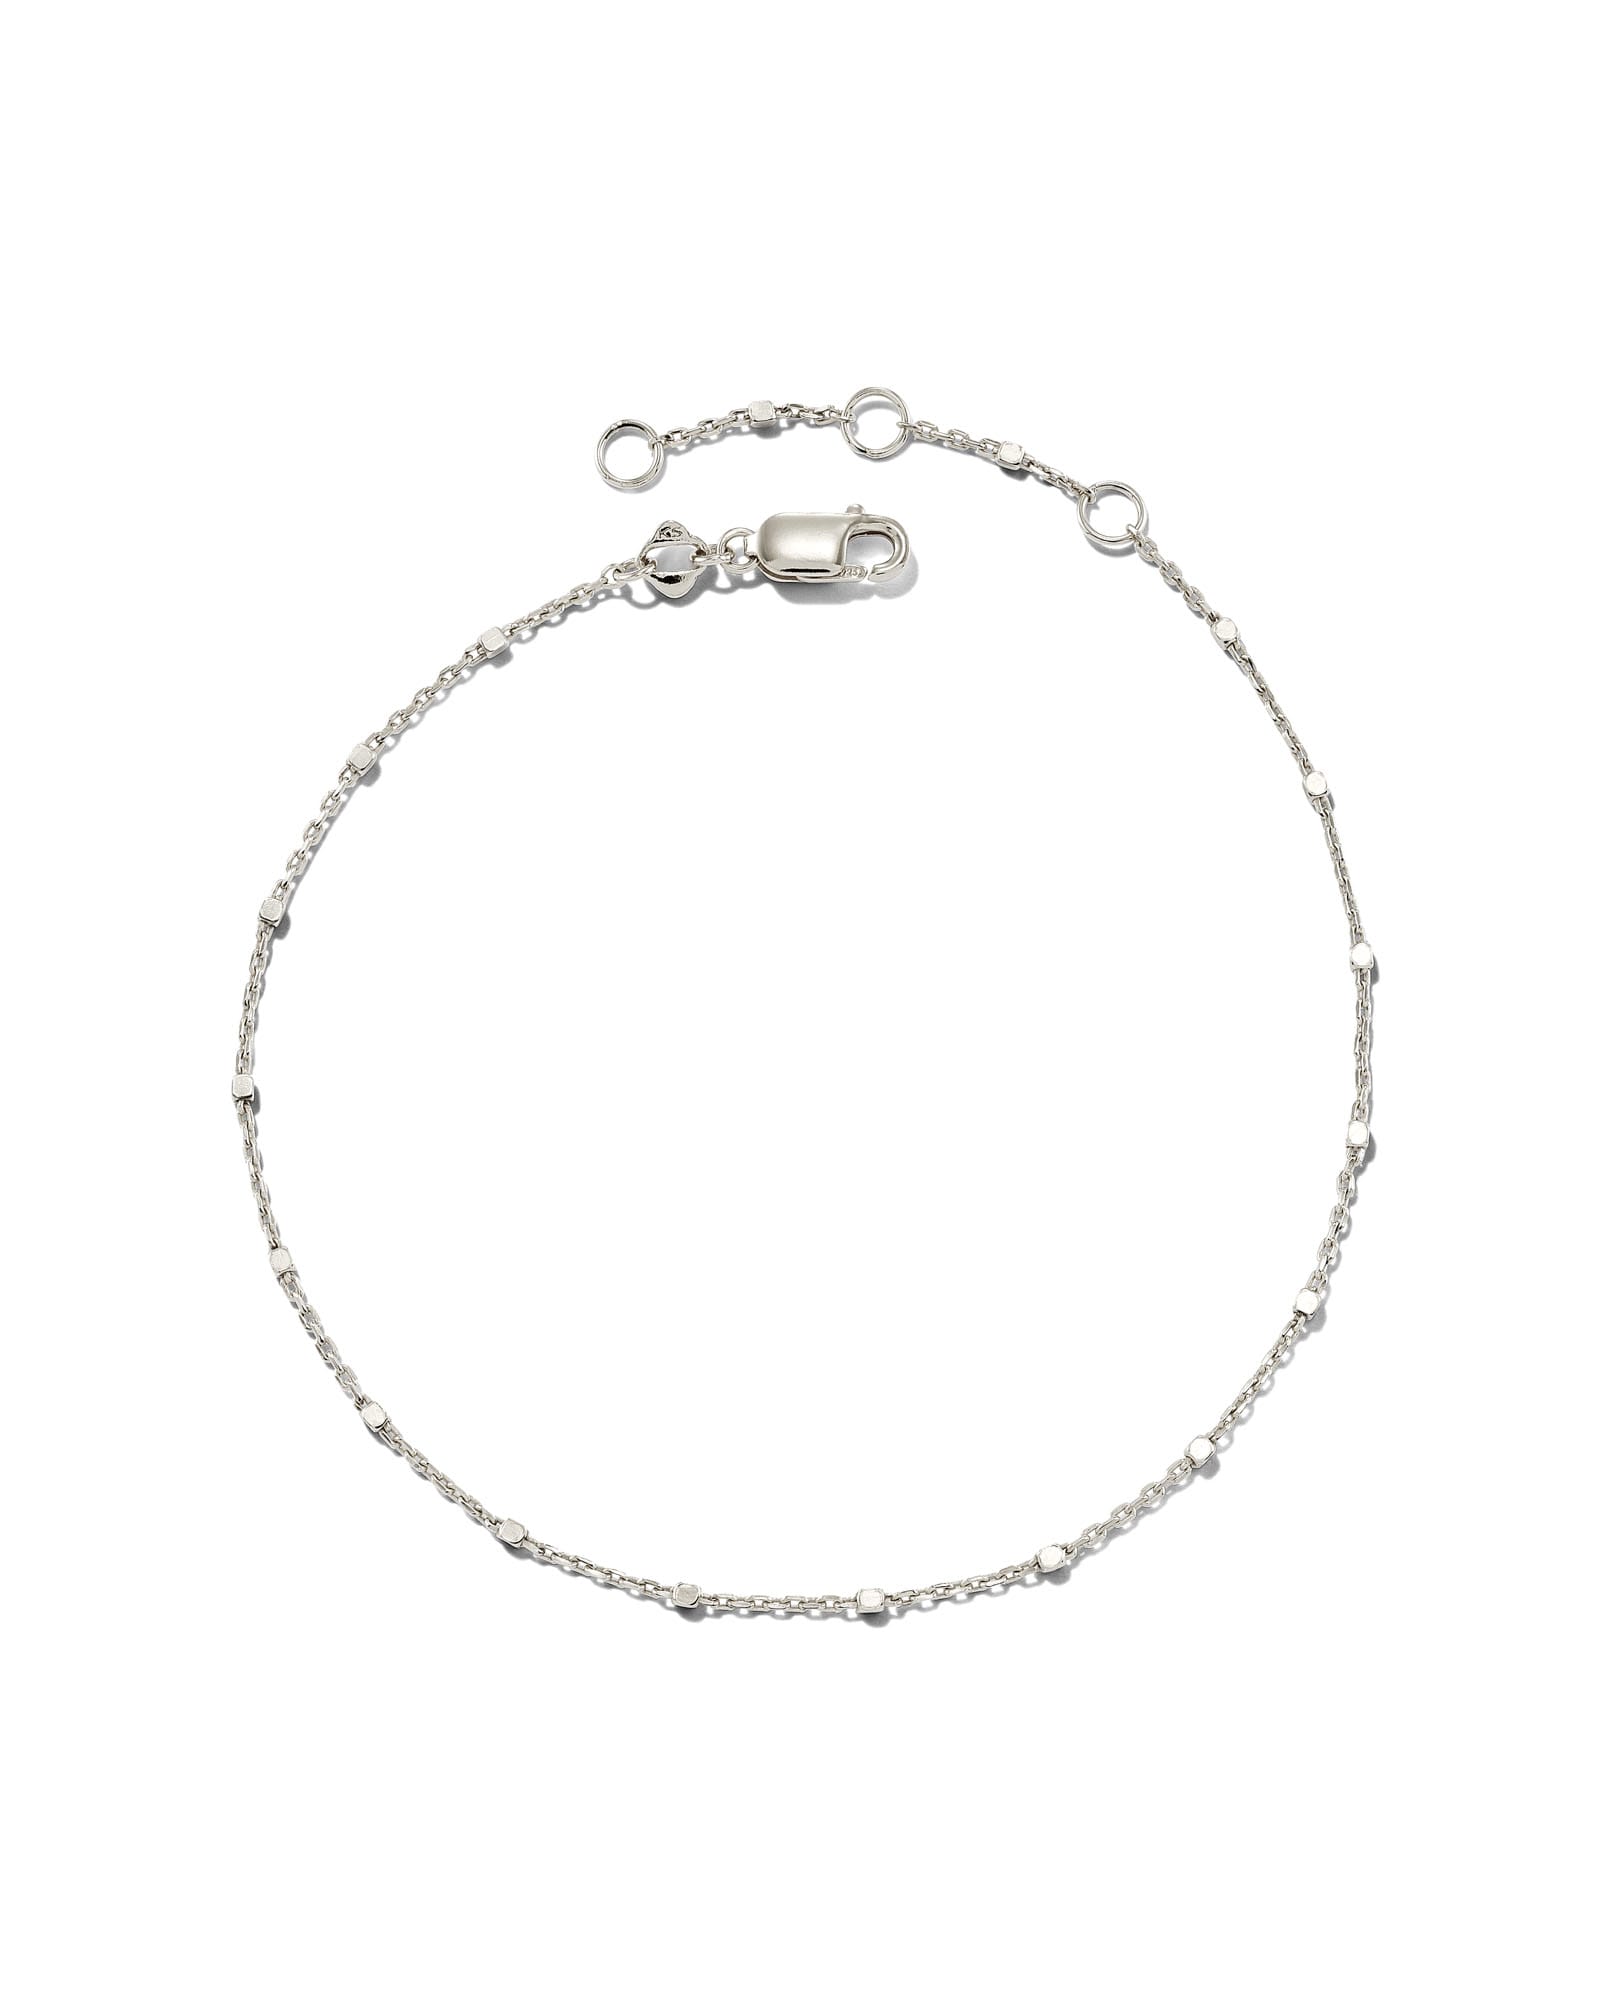 Single Satellite Chain Bracelet in Sterling Silver